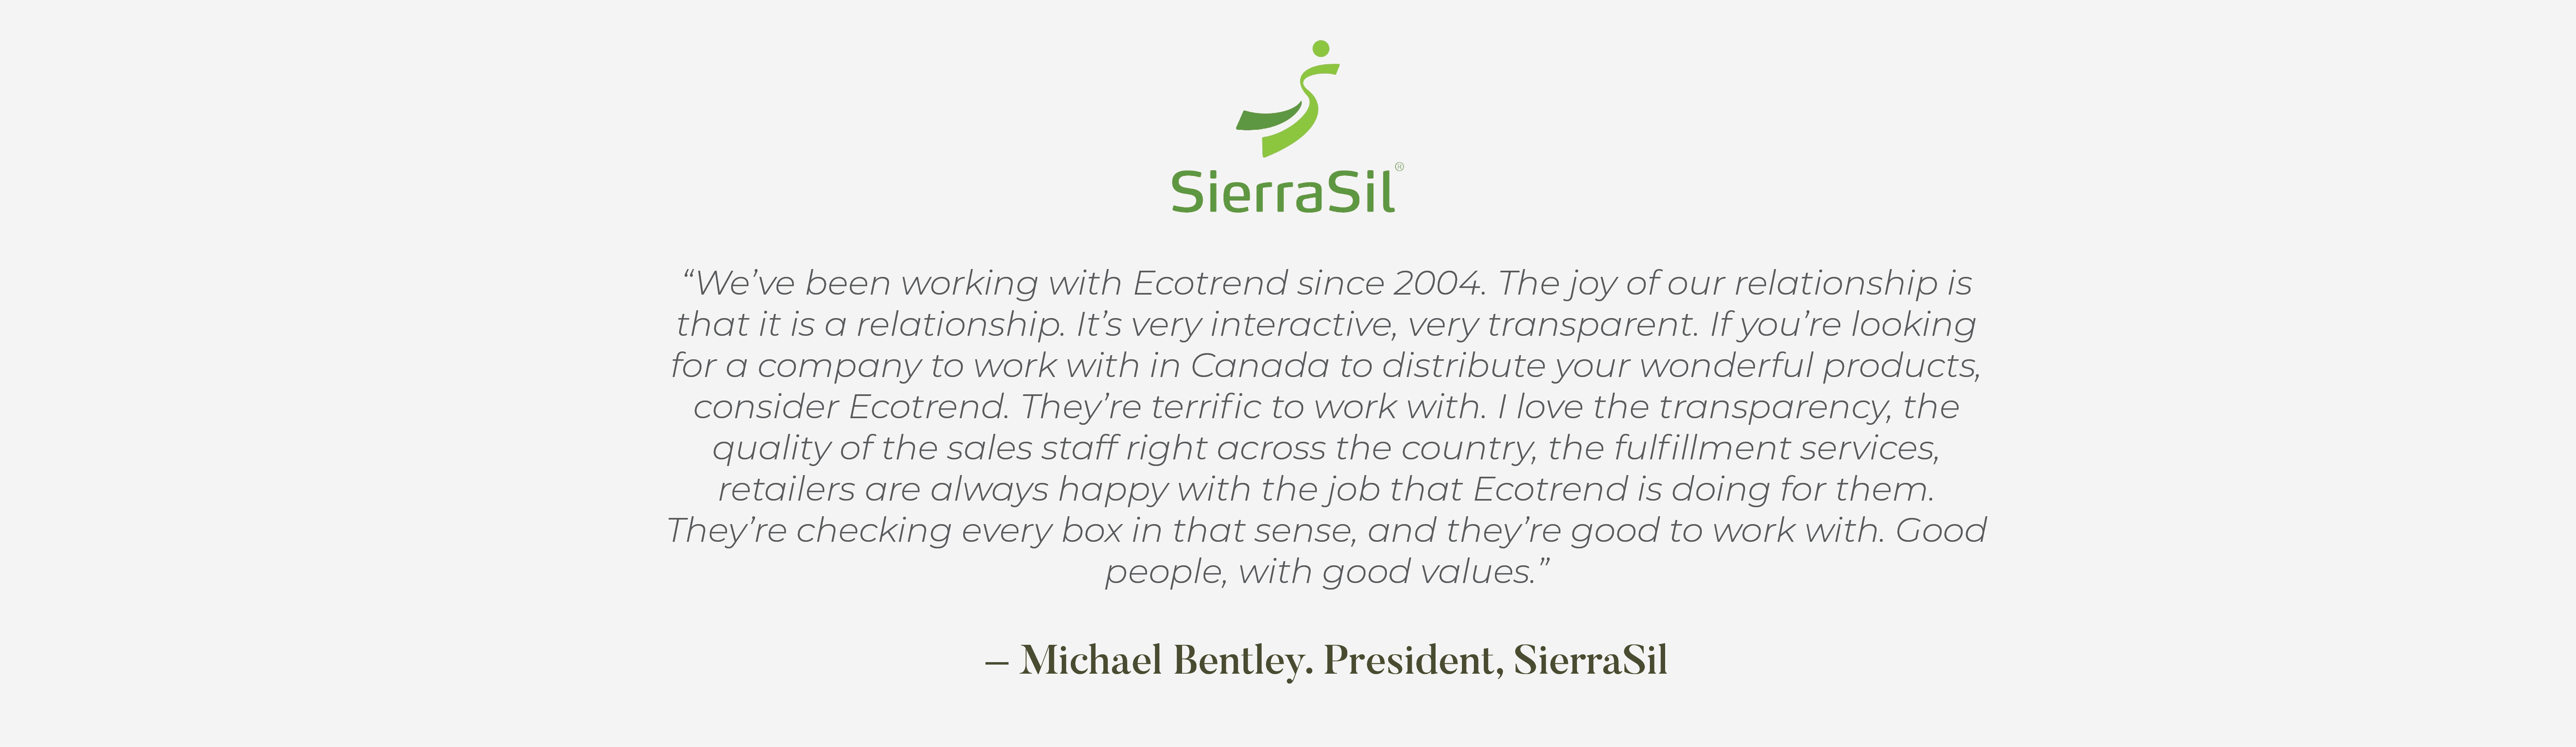 Michael Bentley President of SierraSil testimonial